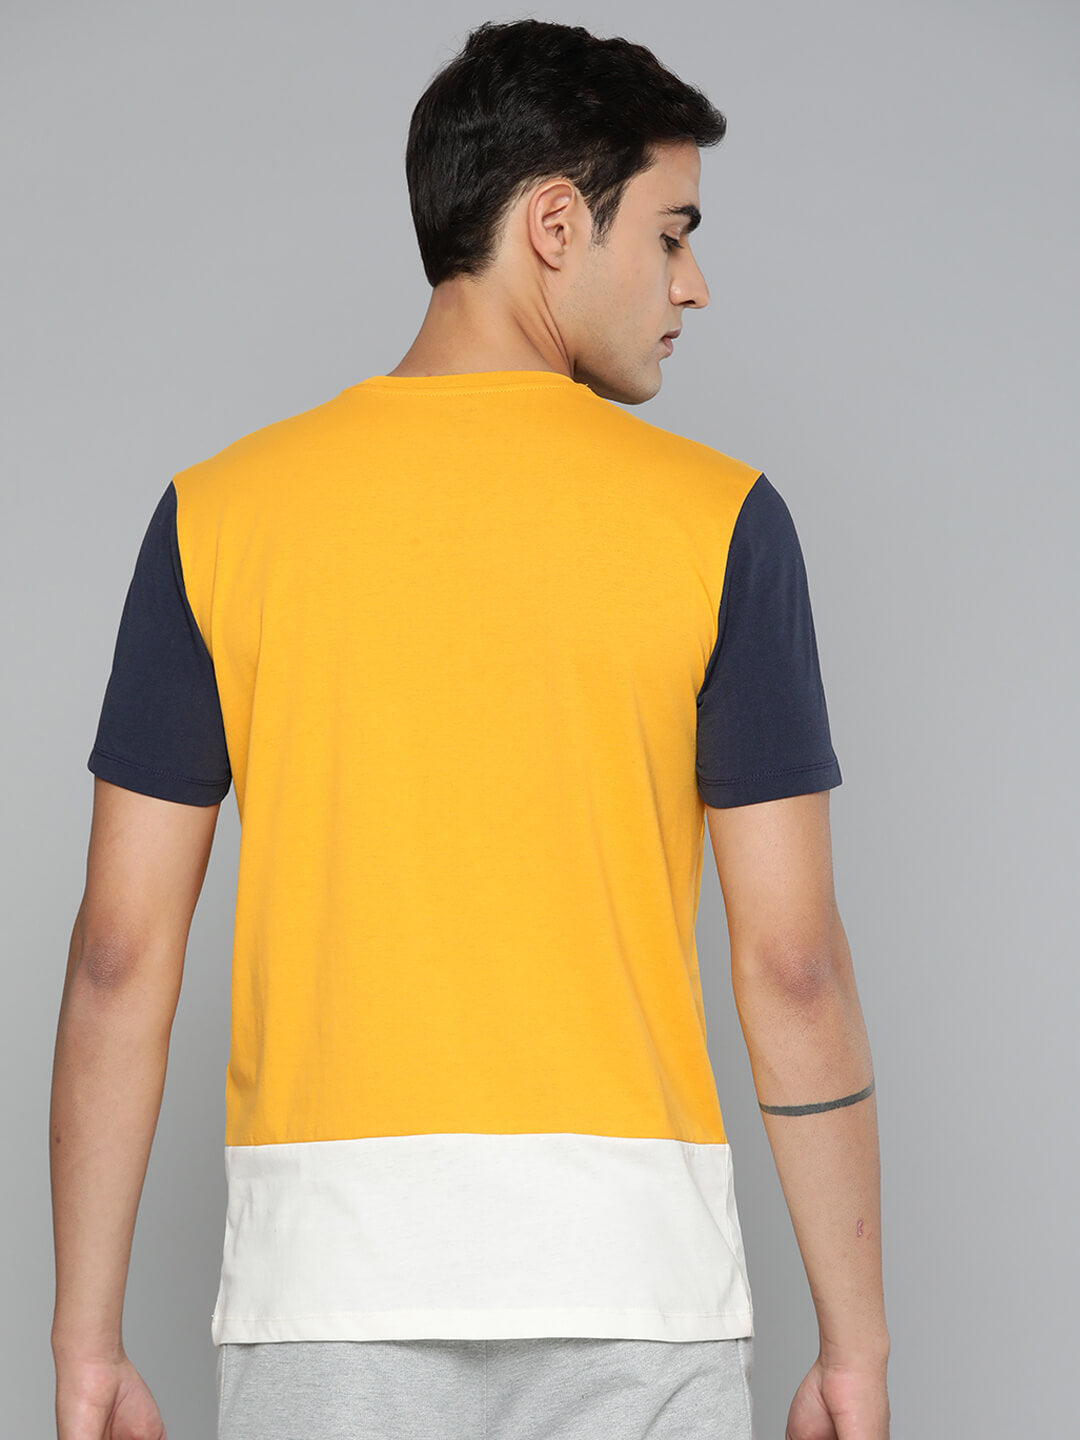 Alcis Men Yellow White Colourblocked Dry Tech Slim Fit Sports T-shirt